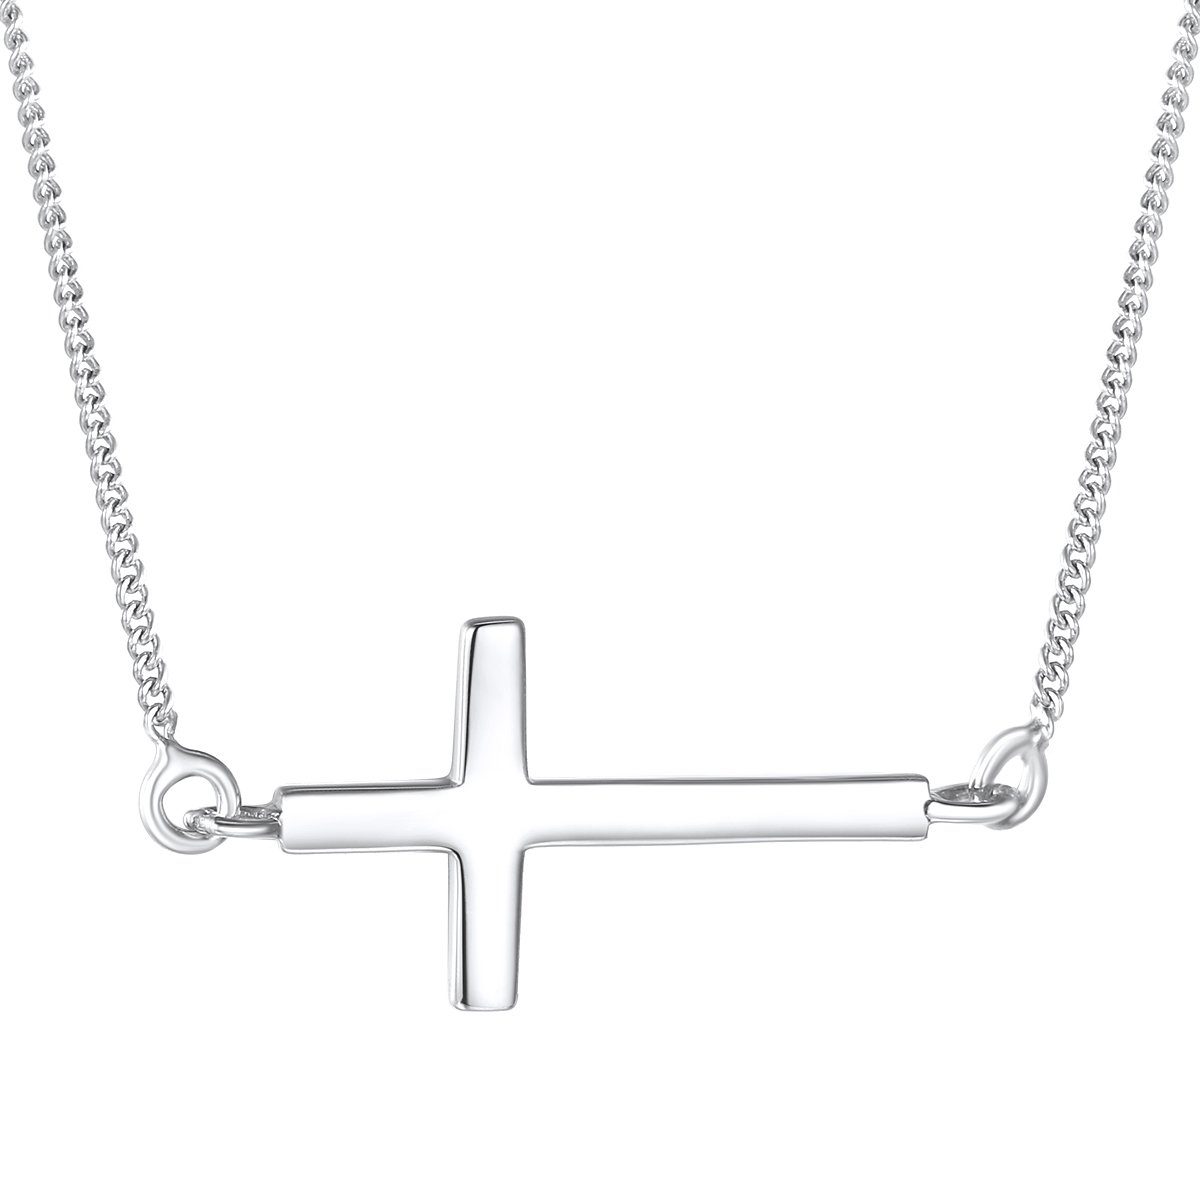 Rafaela Donata Collier Kreuz silber, aus Sterling Silber